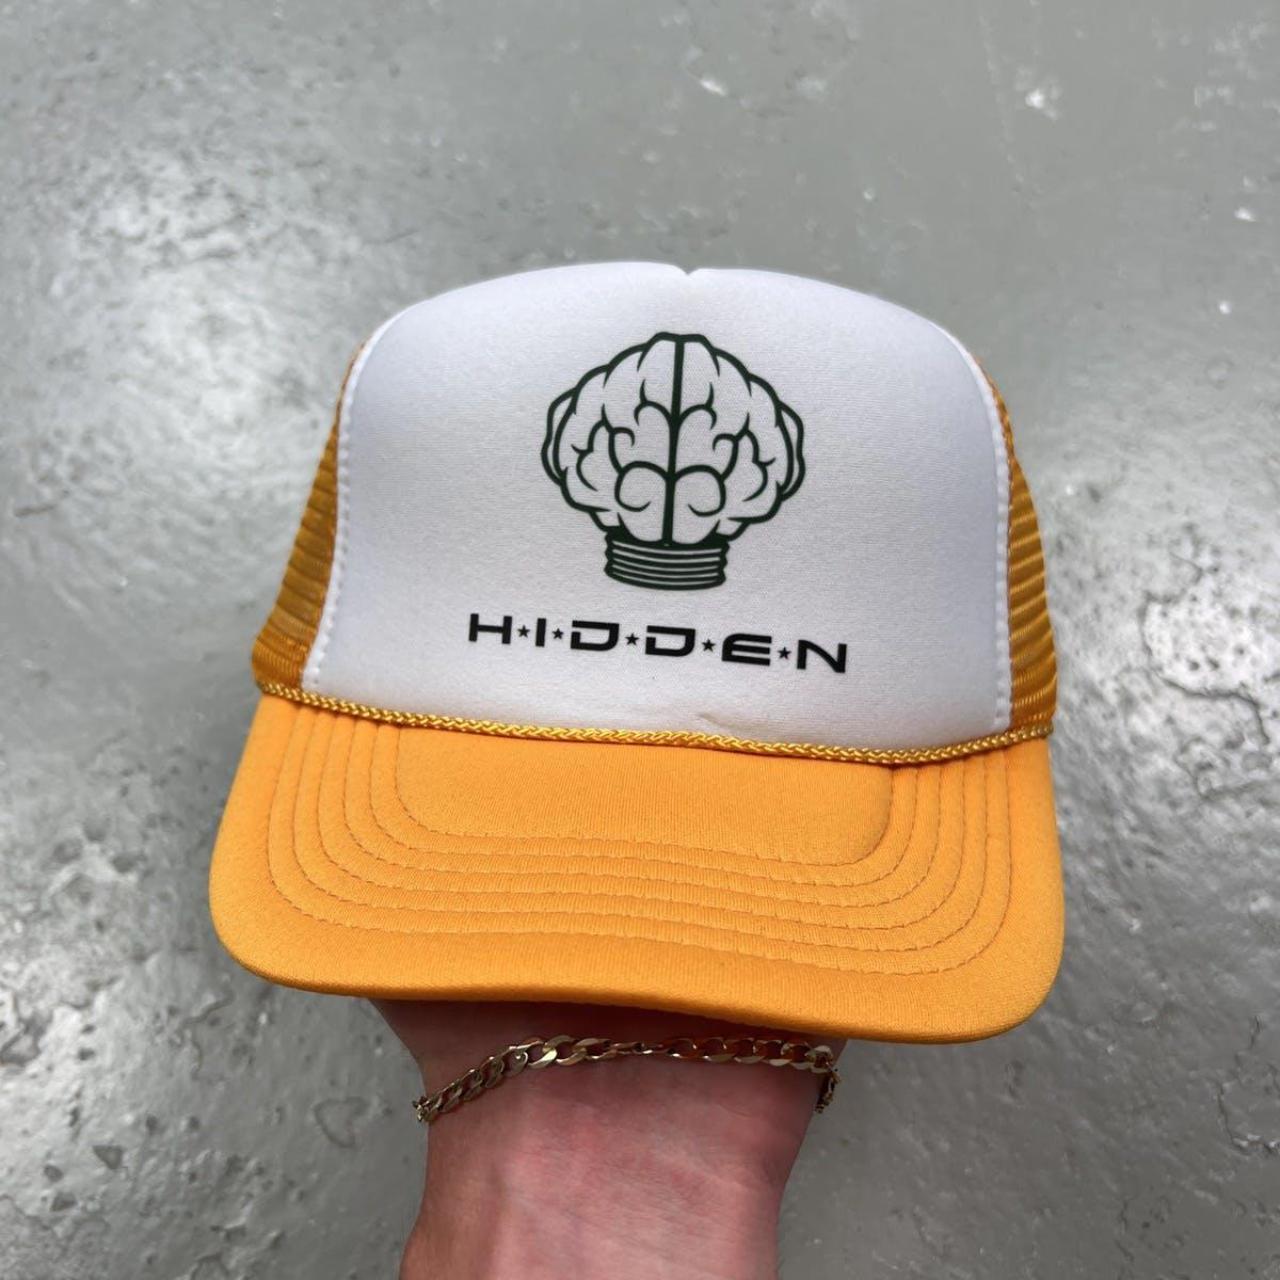 Hidden NY x Nerd Brain Trucker Hat Yellow Brand New - Depop